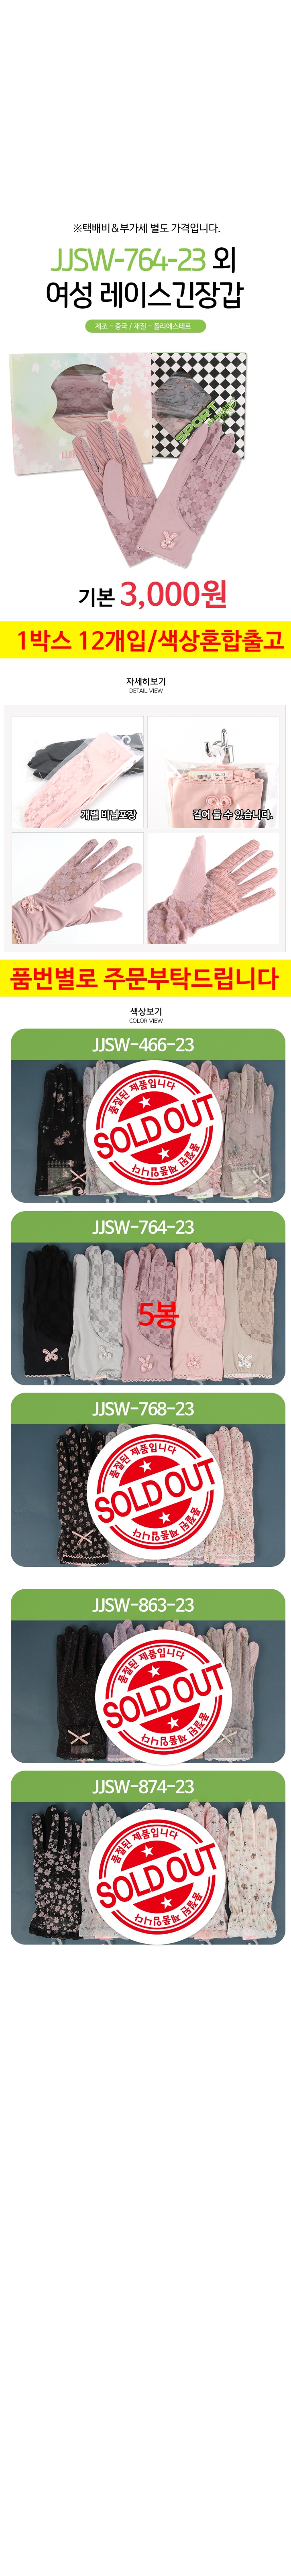 JJSW-764-23-외-여성-레이스장갑(466,764,768,863,874).jpg